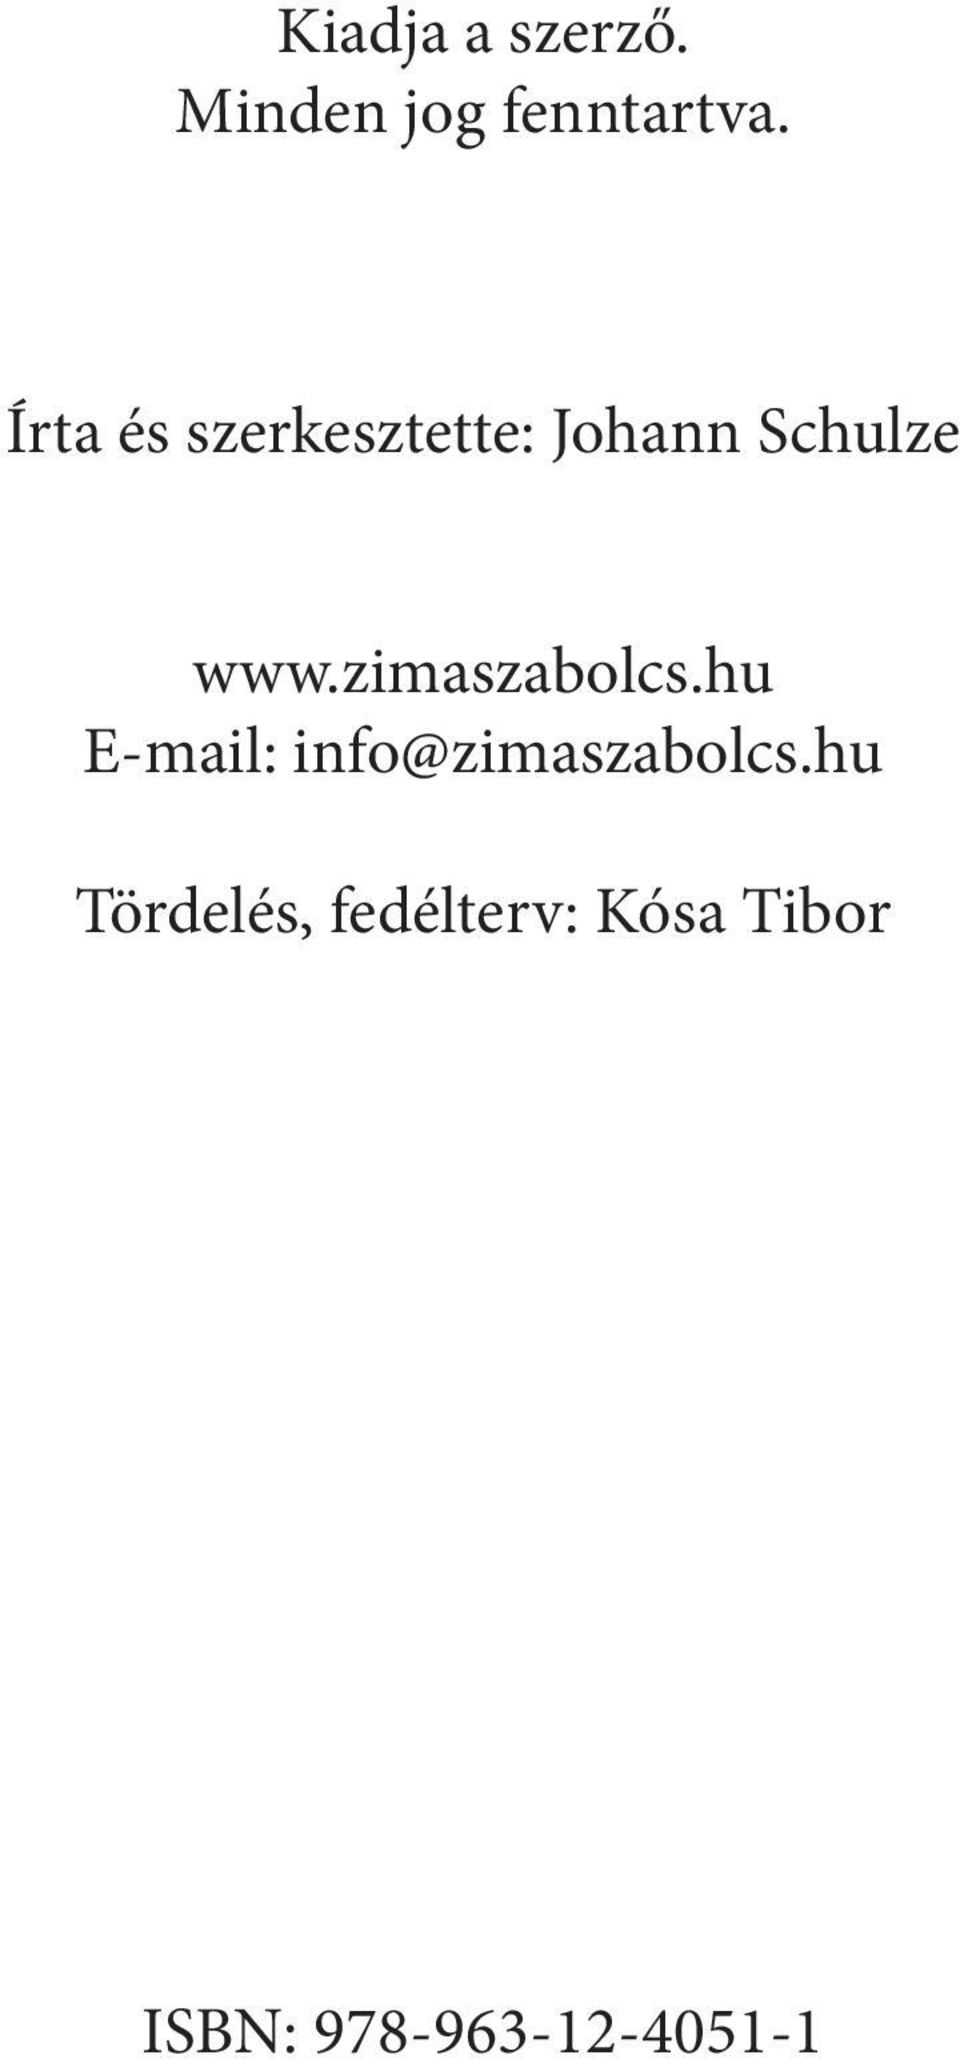 zimaszabolcs.hu E-mail: info@zimaszabolcs.